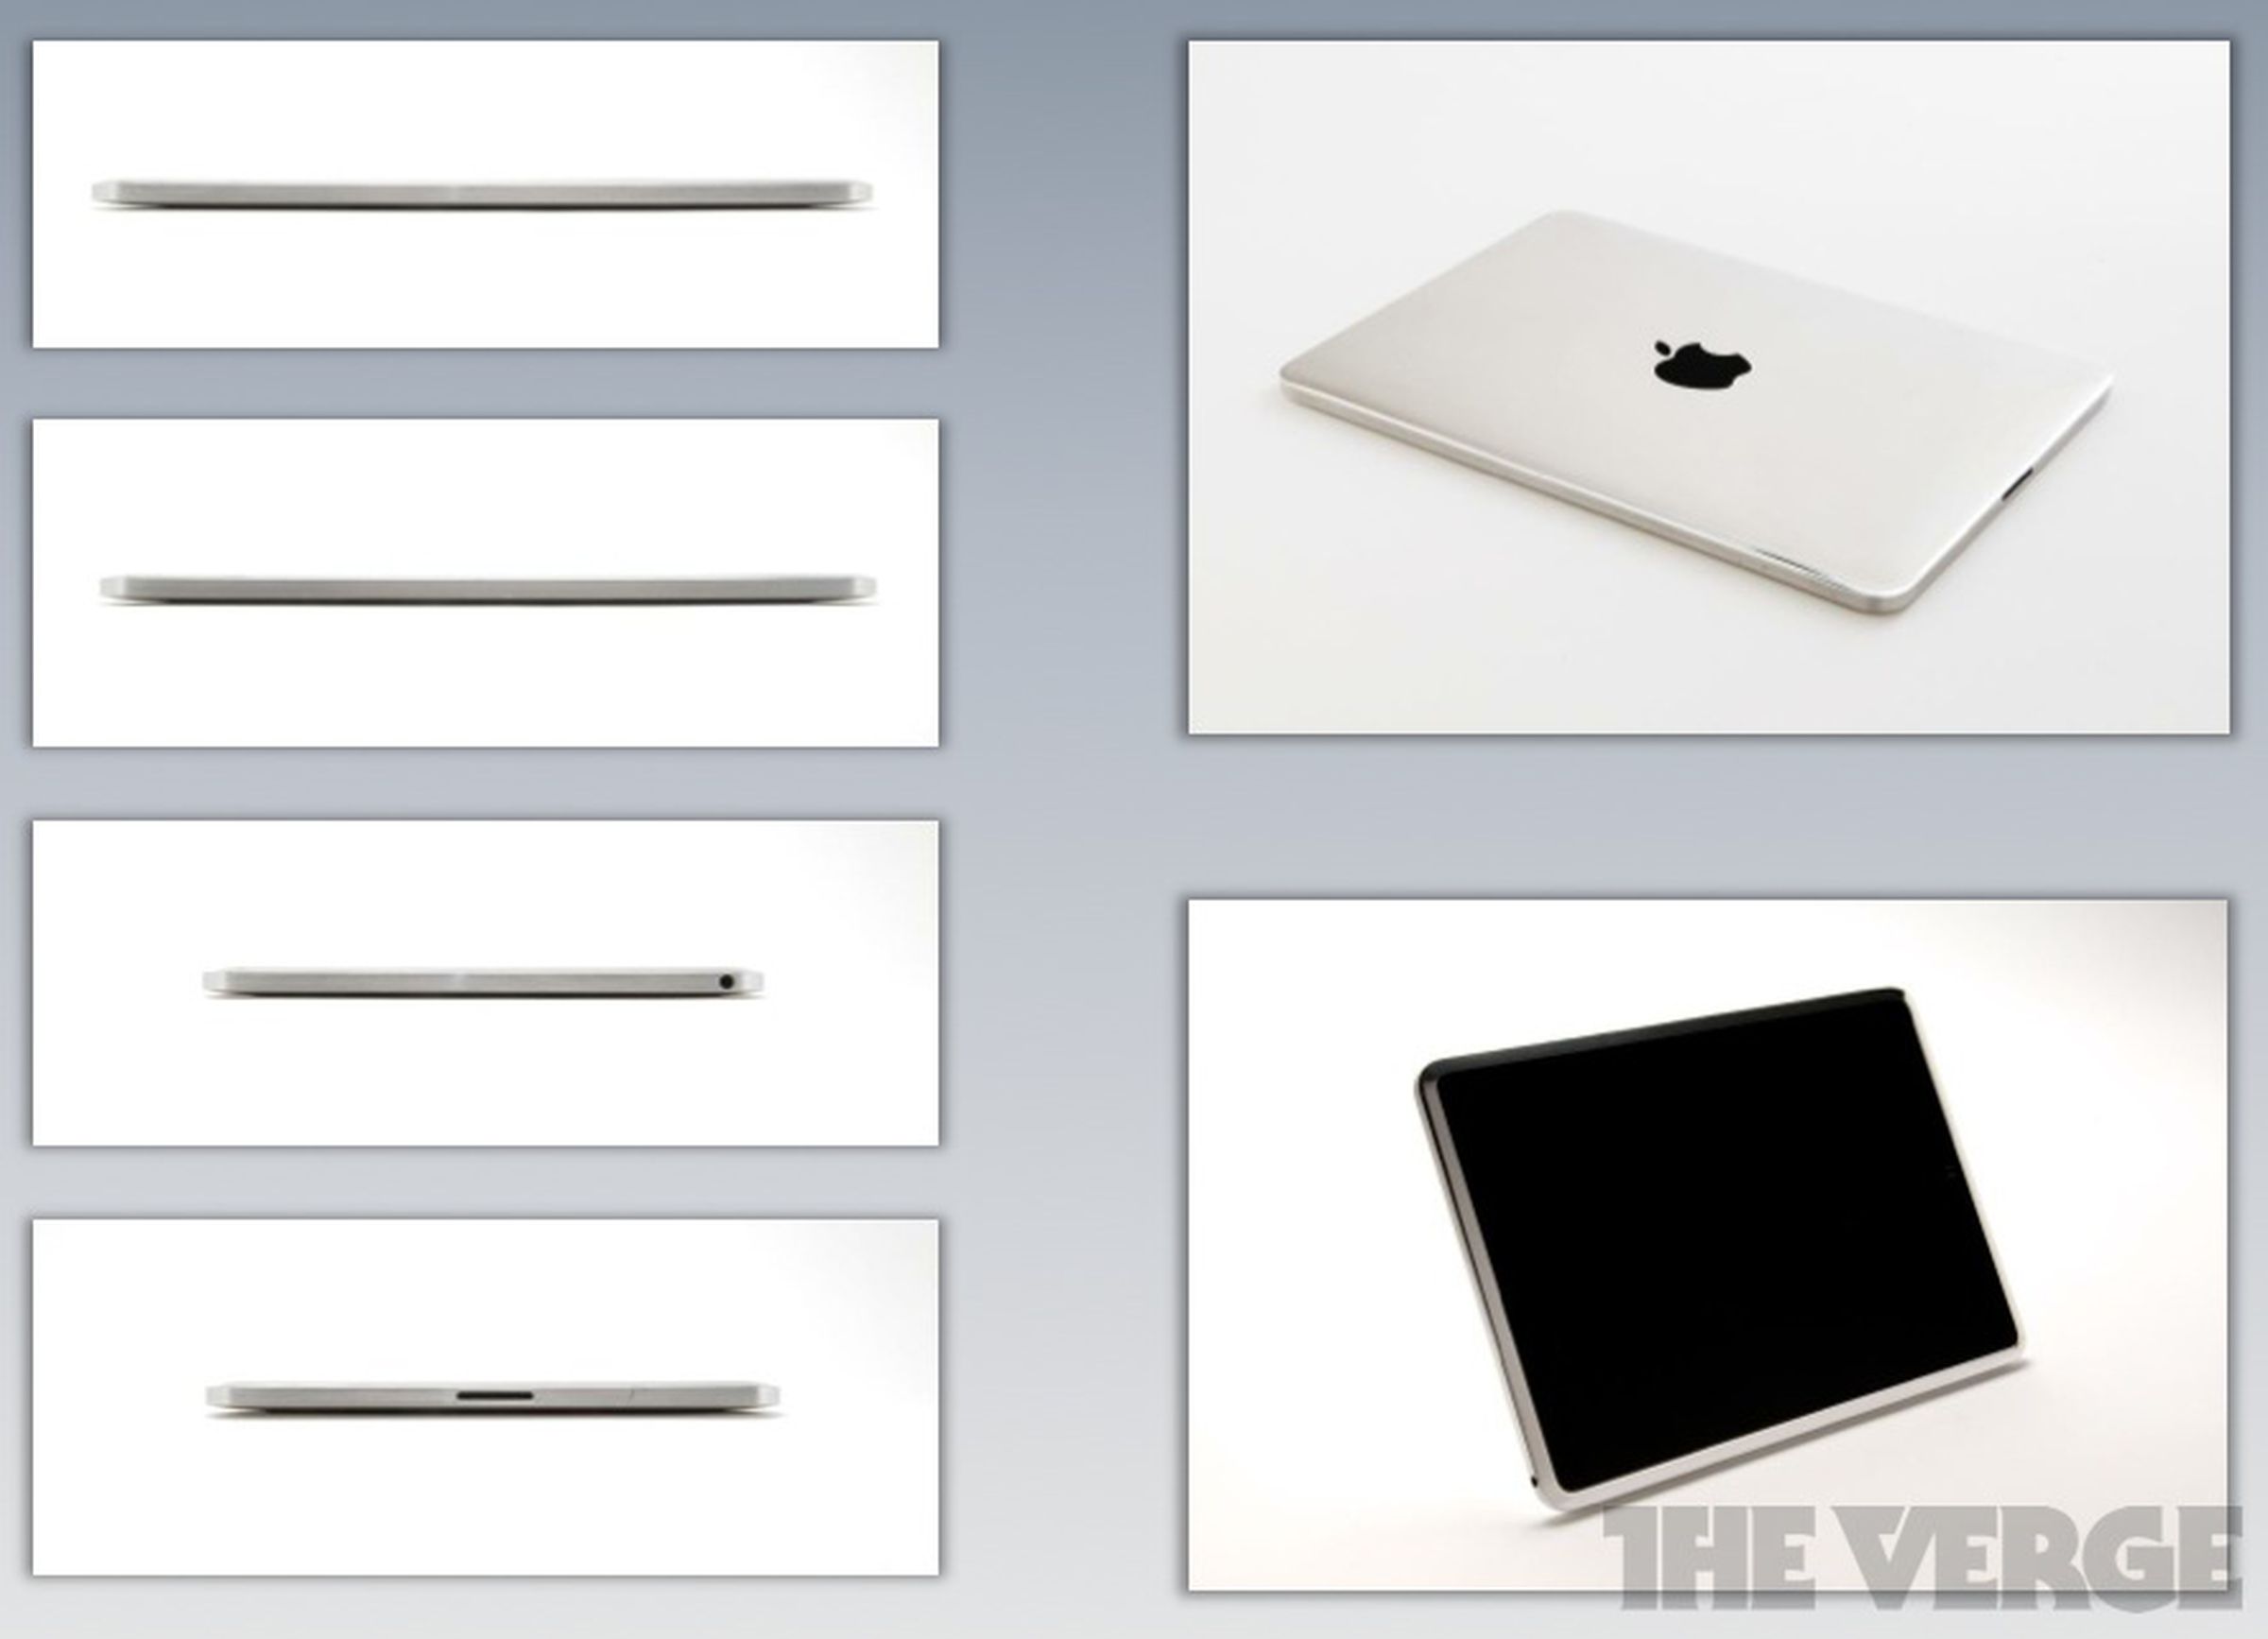 Apple iPad prototype images